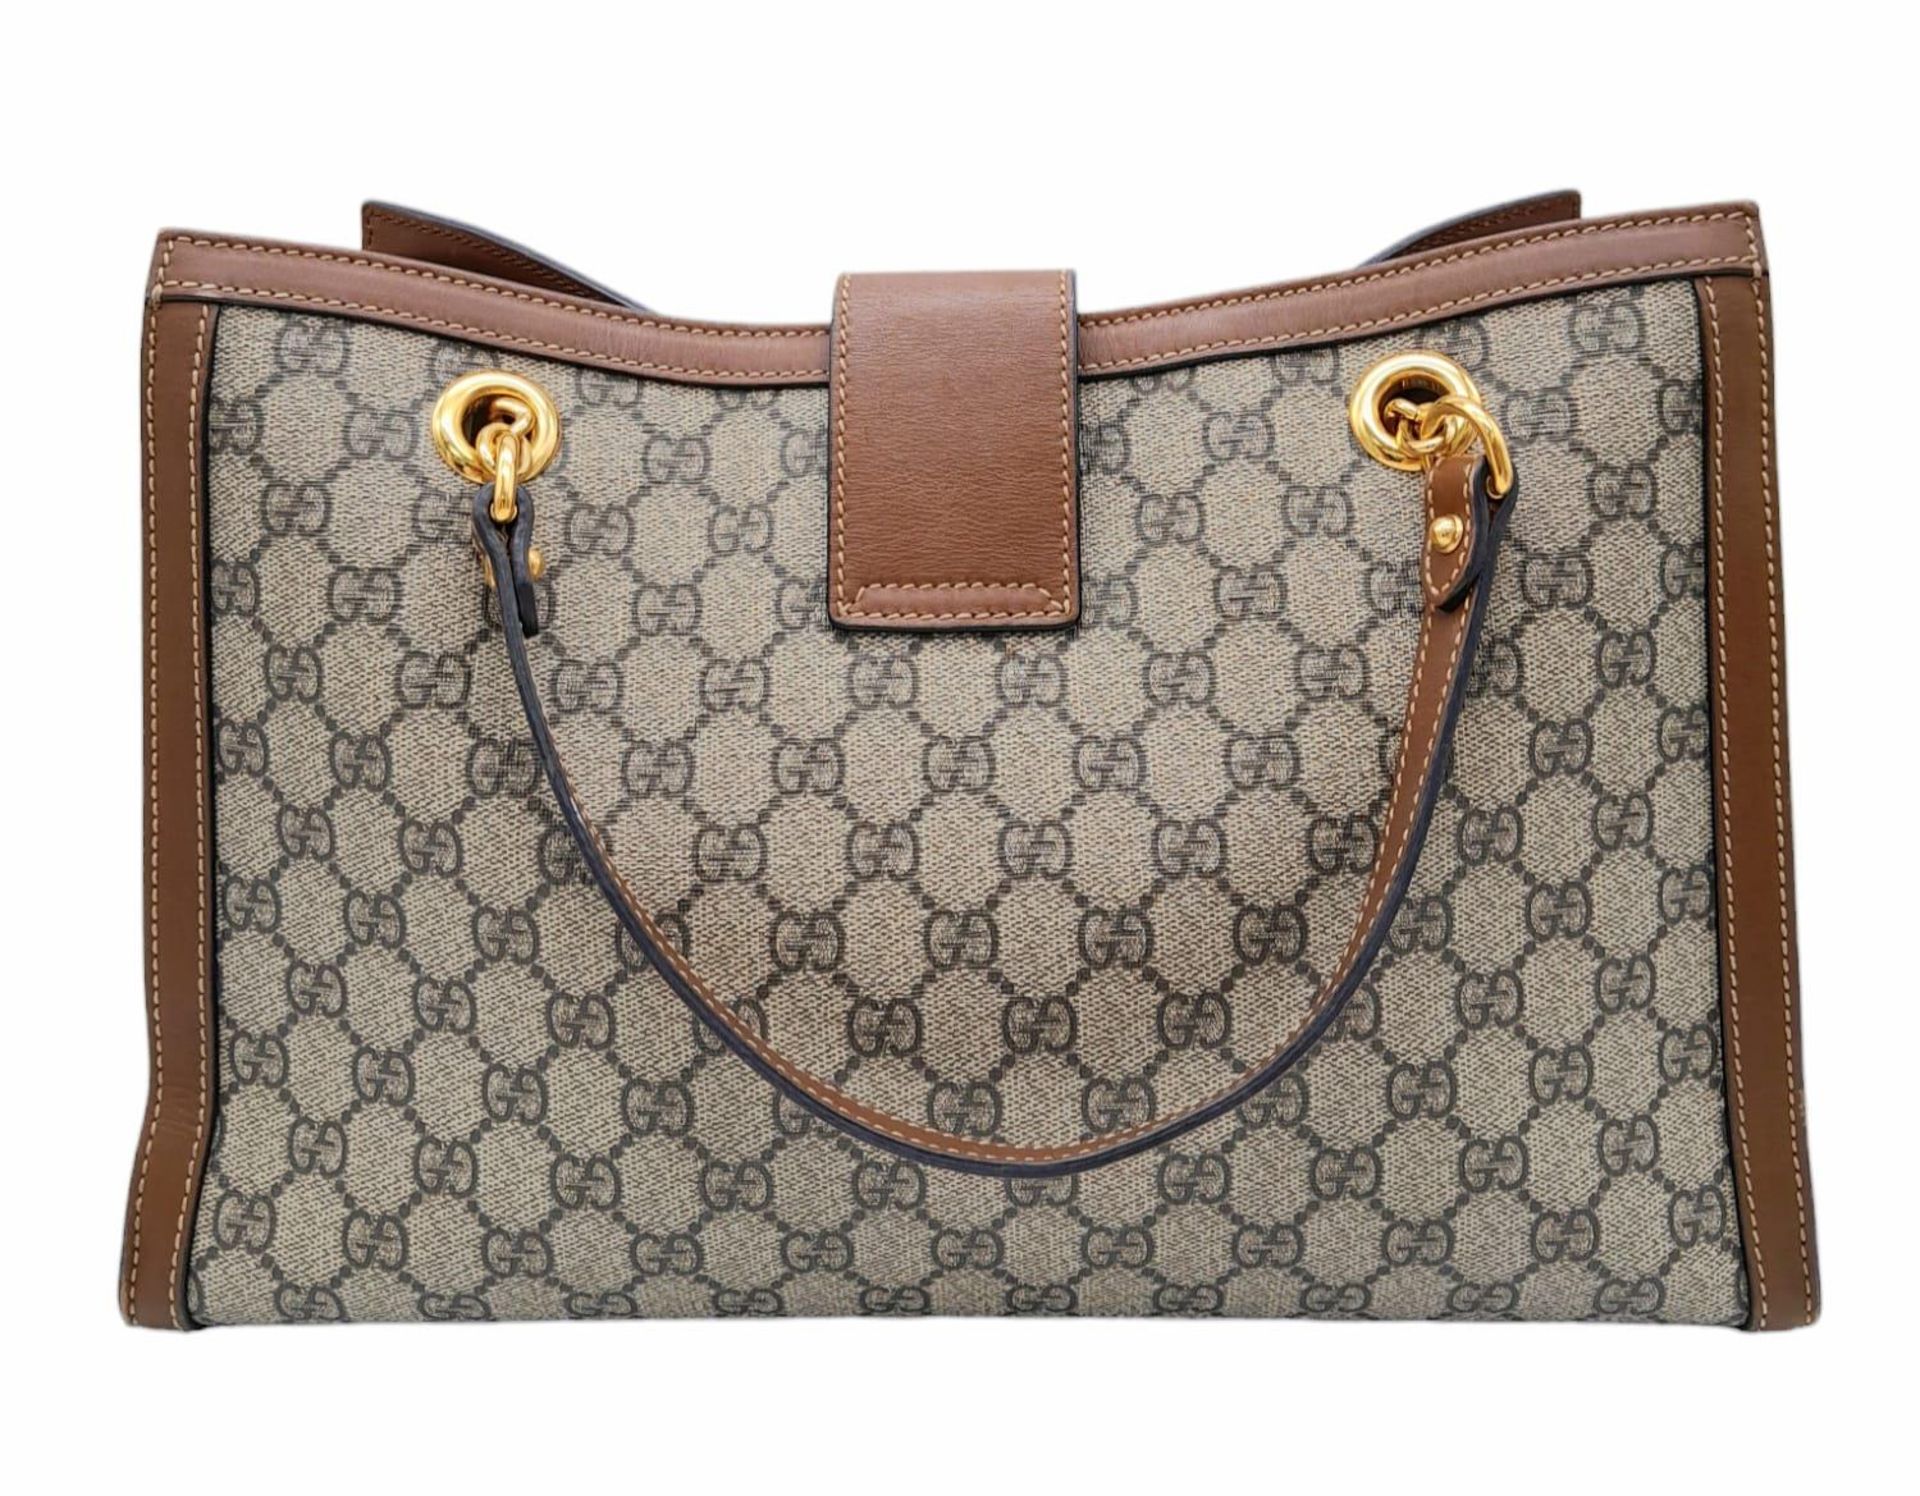 A Gucci GG padlock medium shoulder bag, gold tone hardware, brown suede leather interior. Size - Image 3 of 11